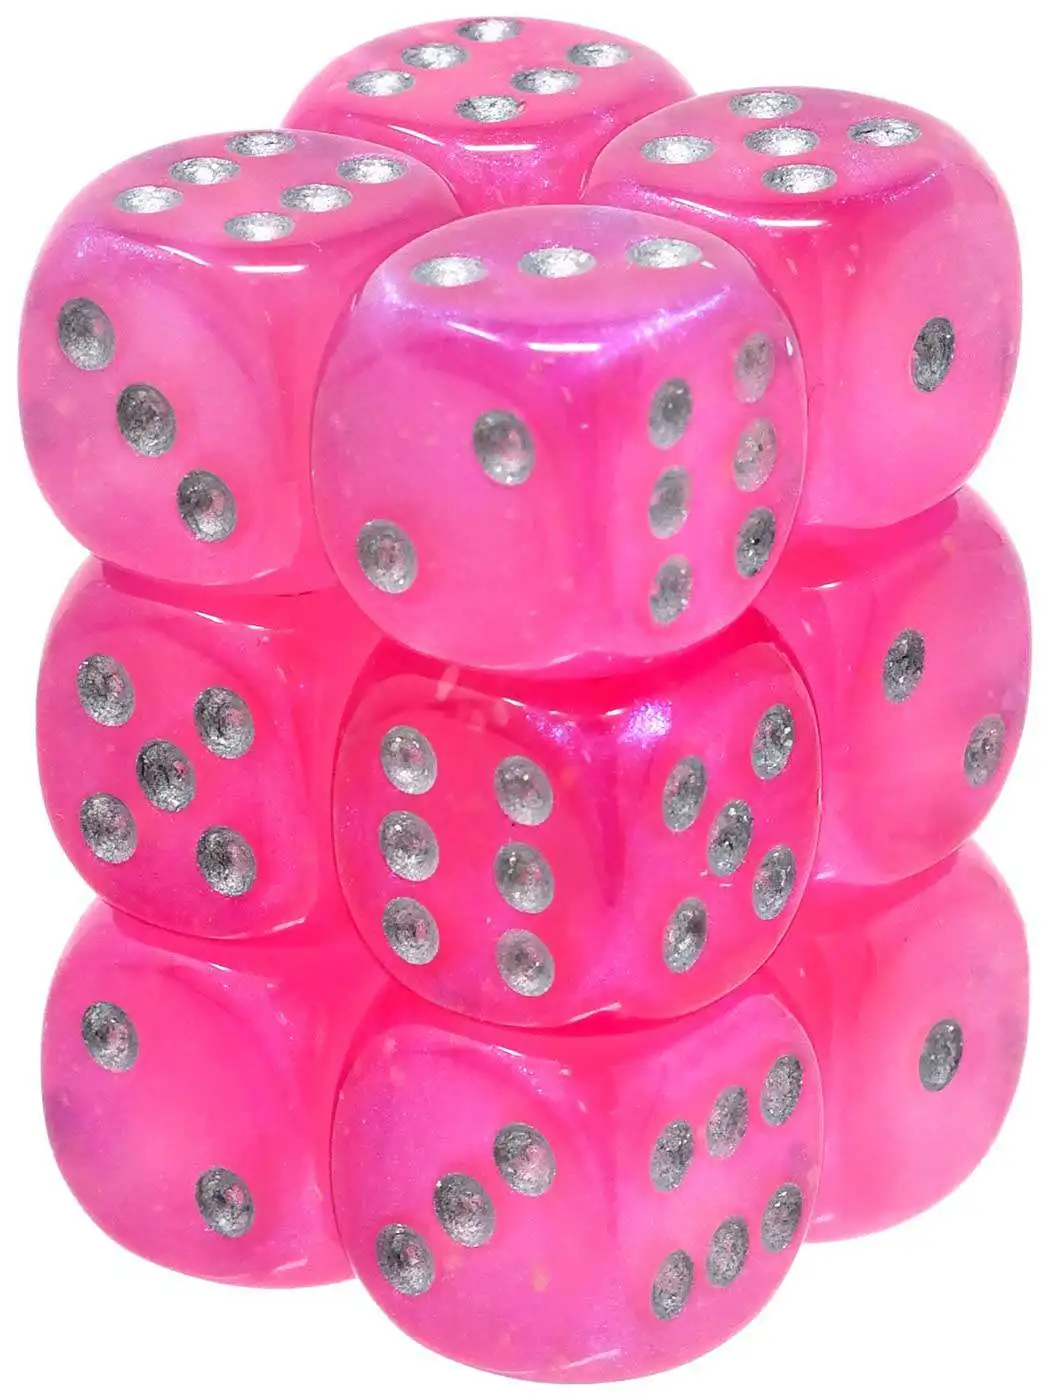 12 Dice Borealis Pink/silver 16mm d6 Luminary Dice Block 